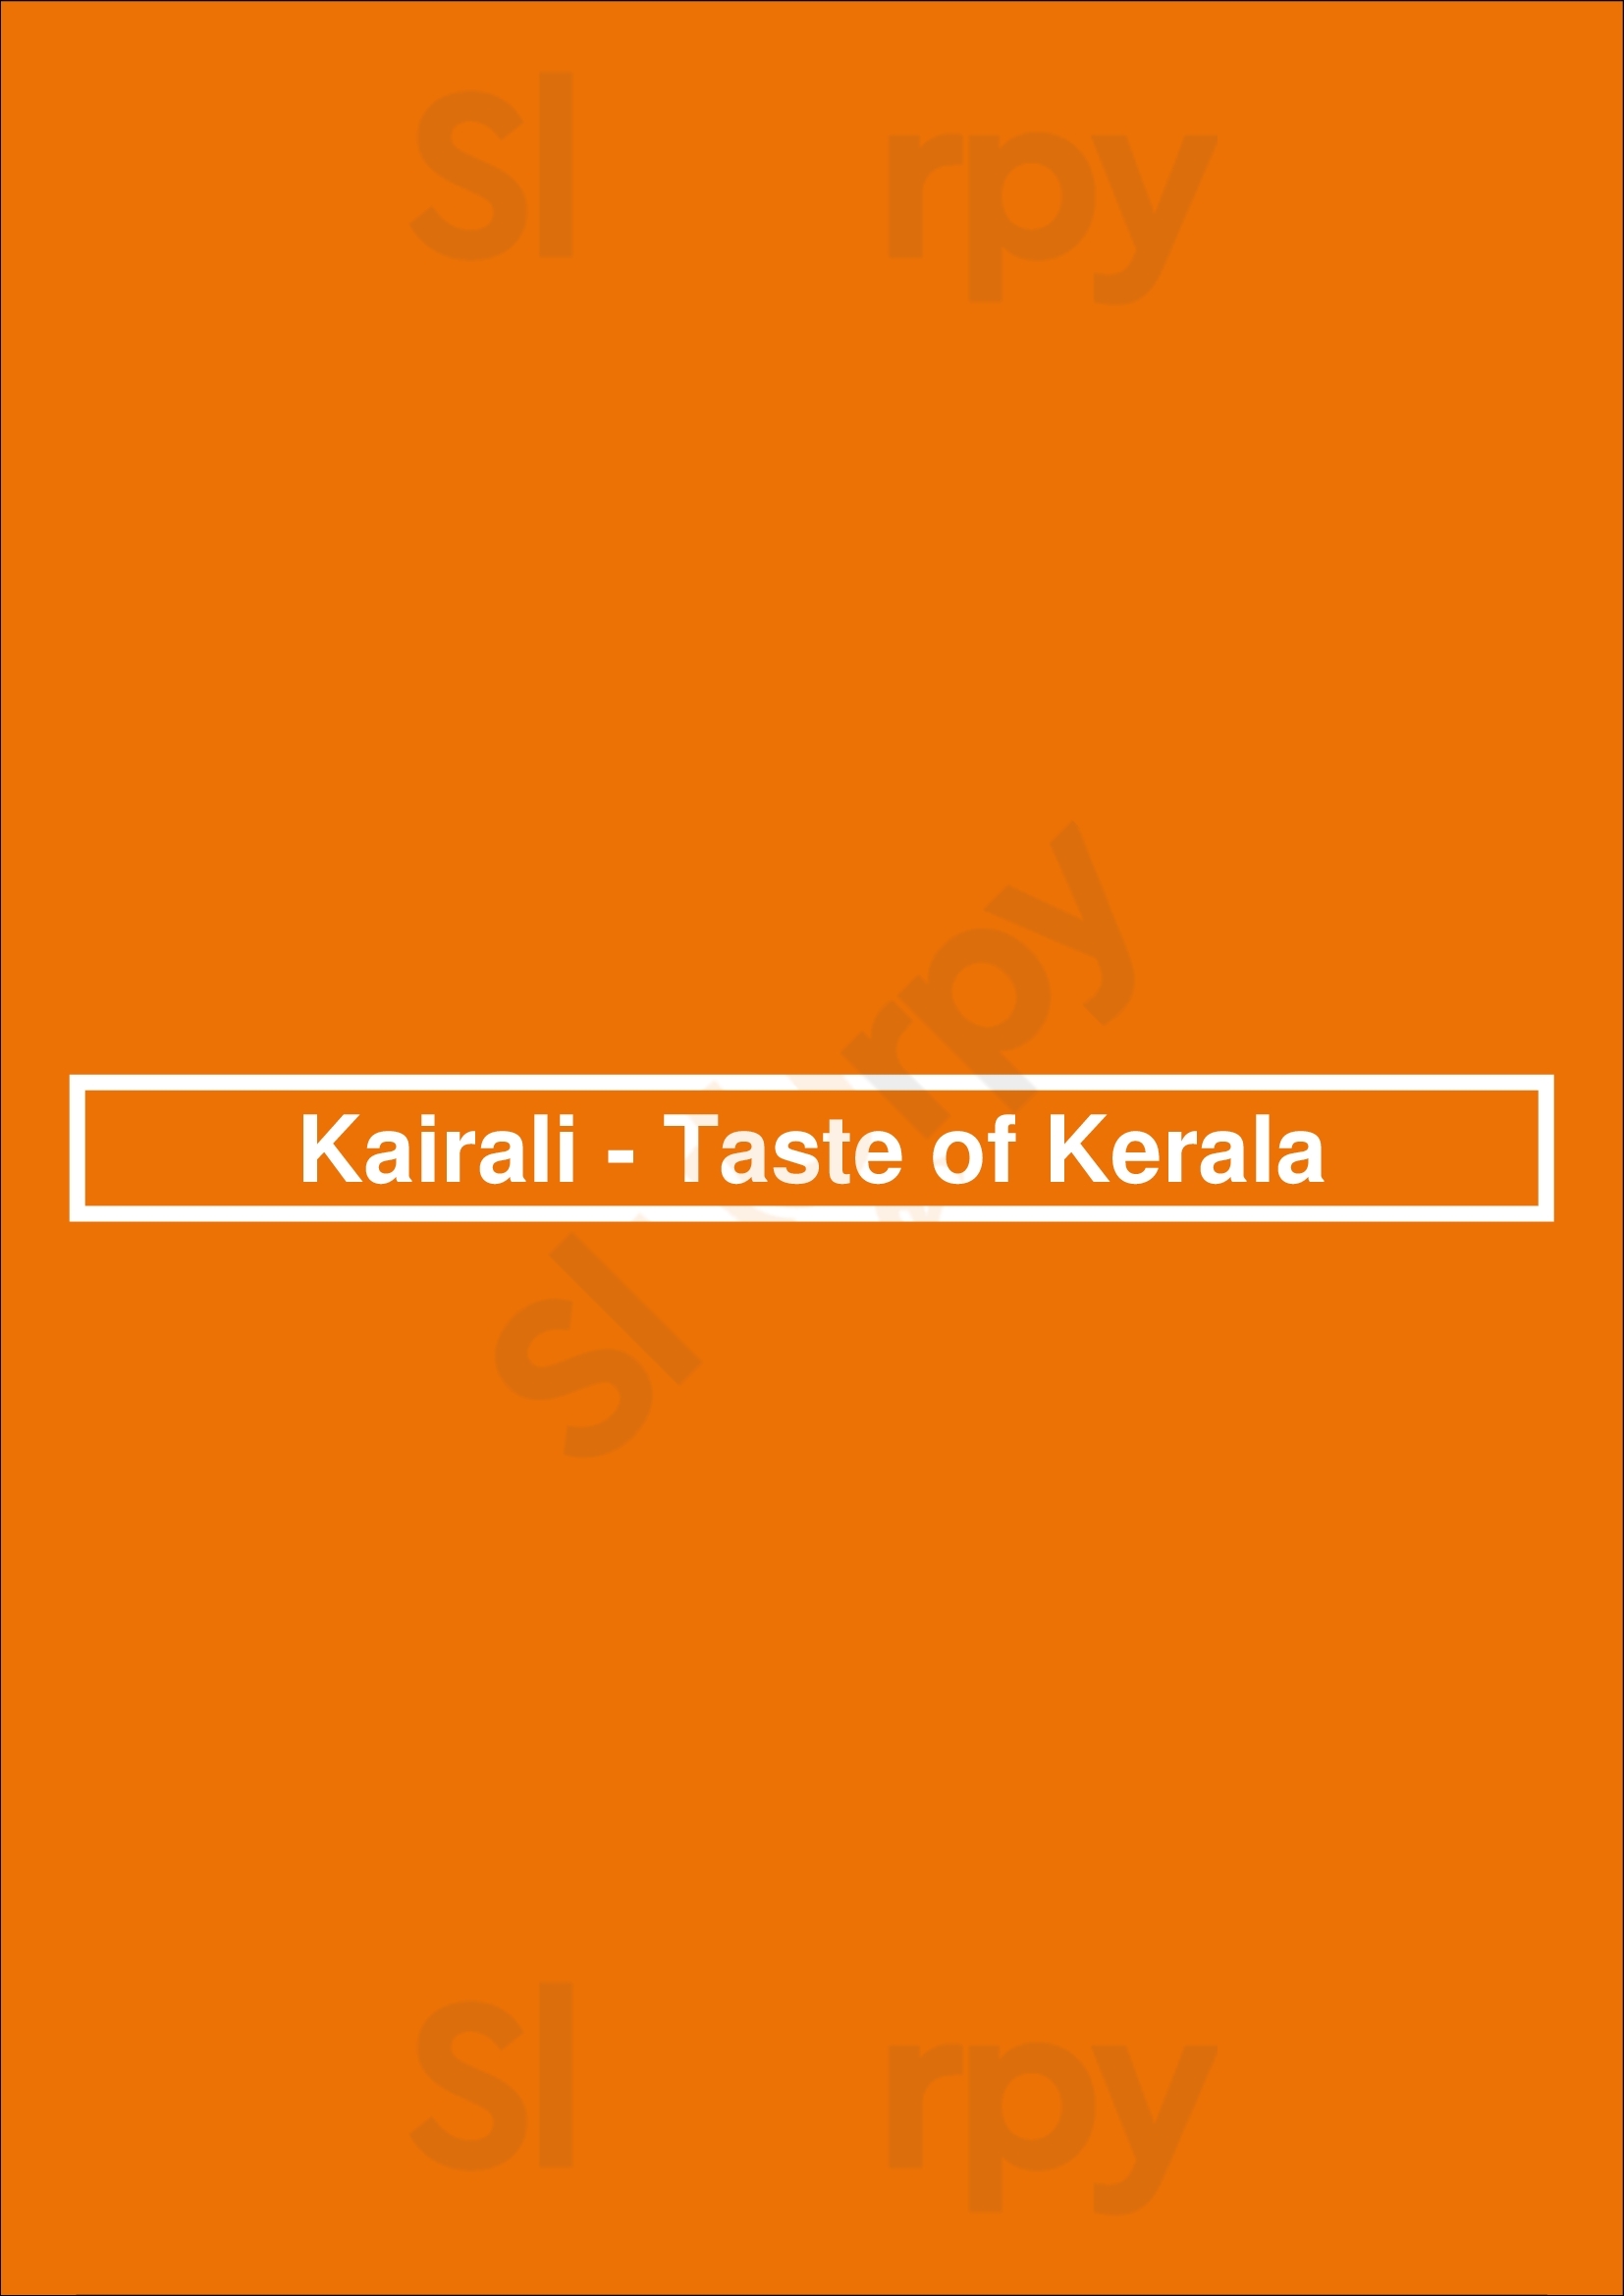 Kairali - Taste Of Kerala Toronto Menu - 1